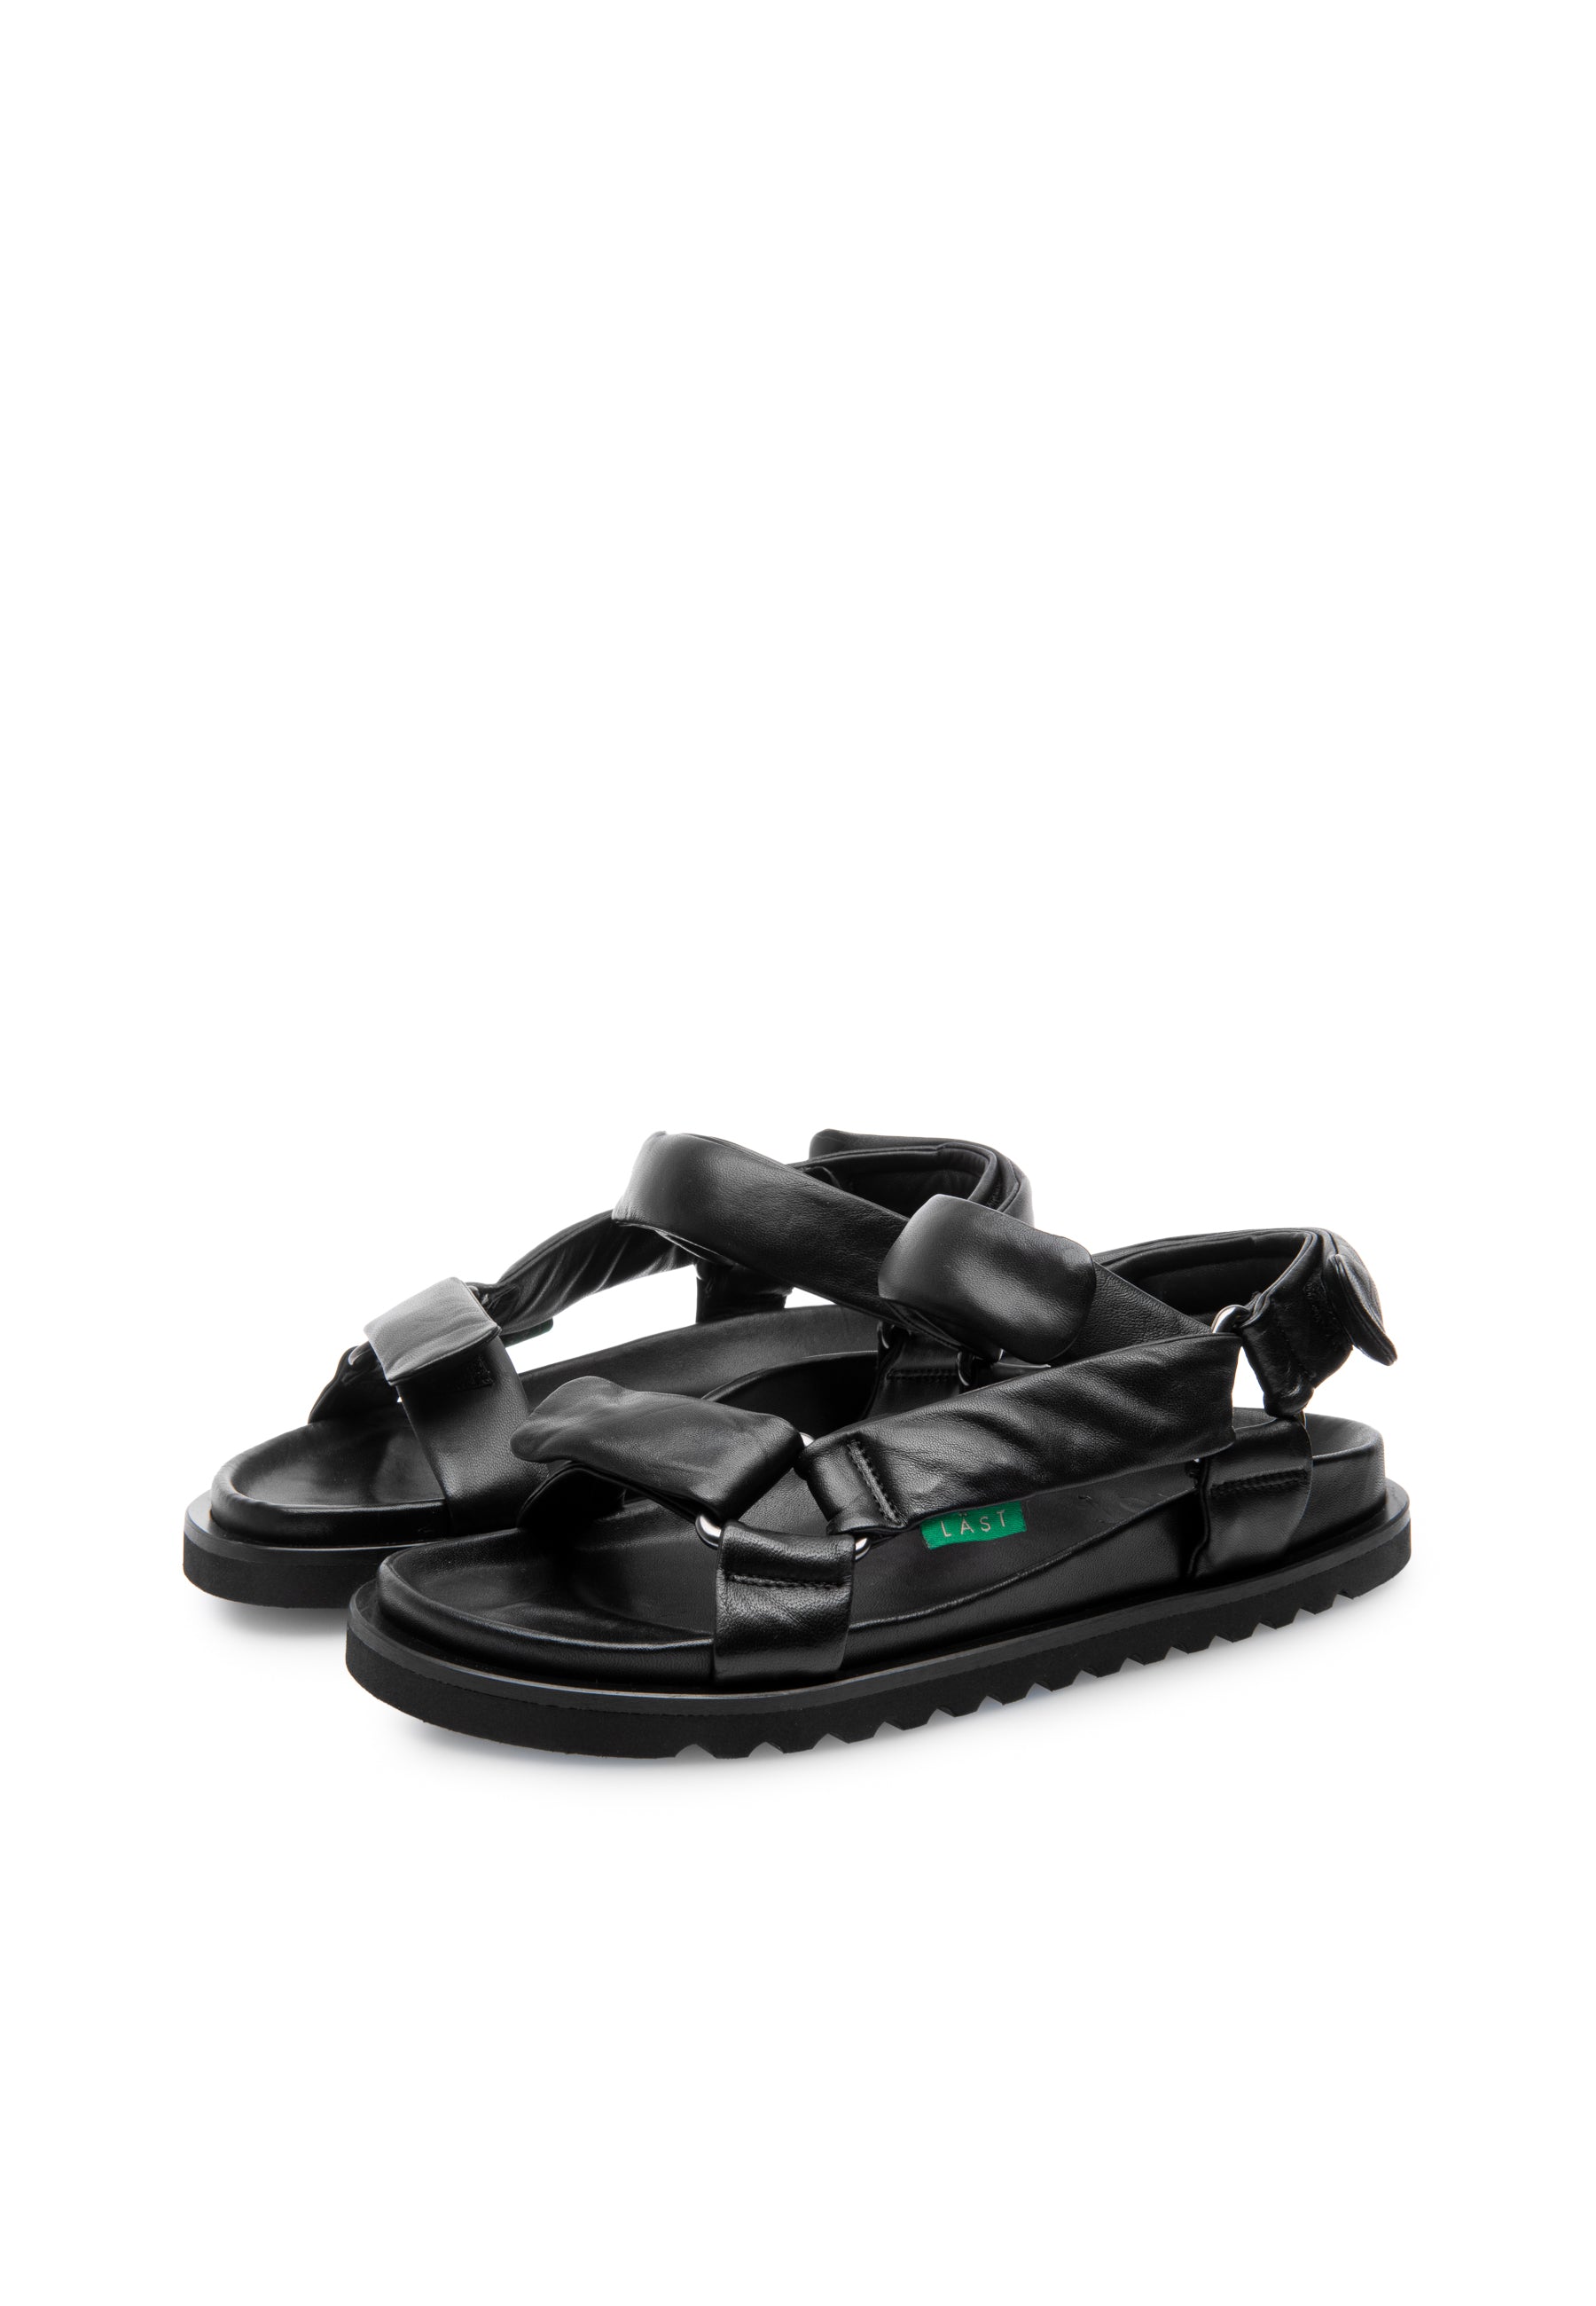 Flora Black Leather Sandals LAST1541 - 3